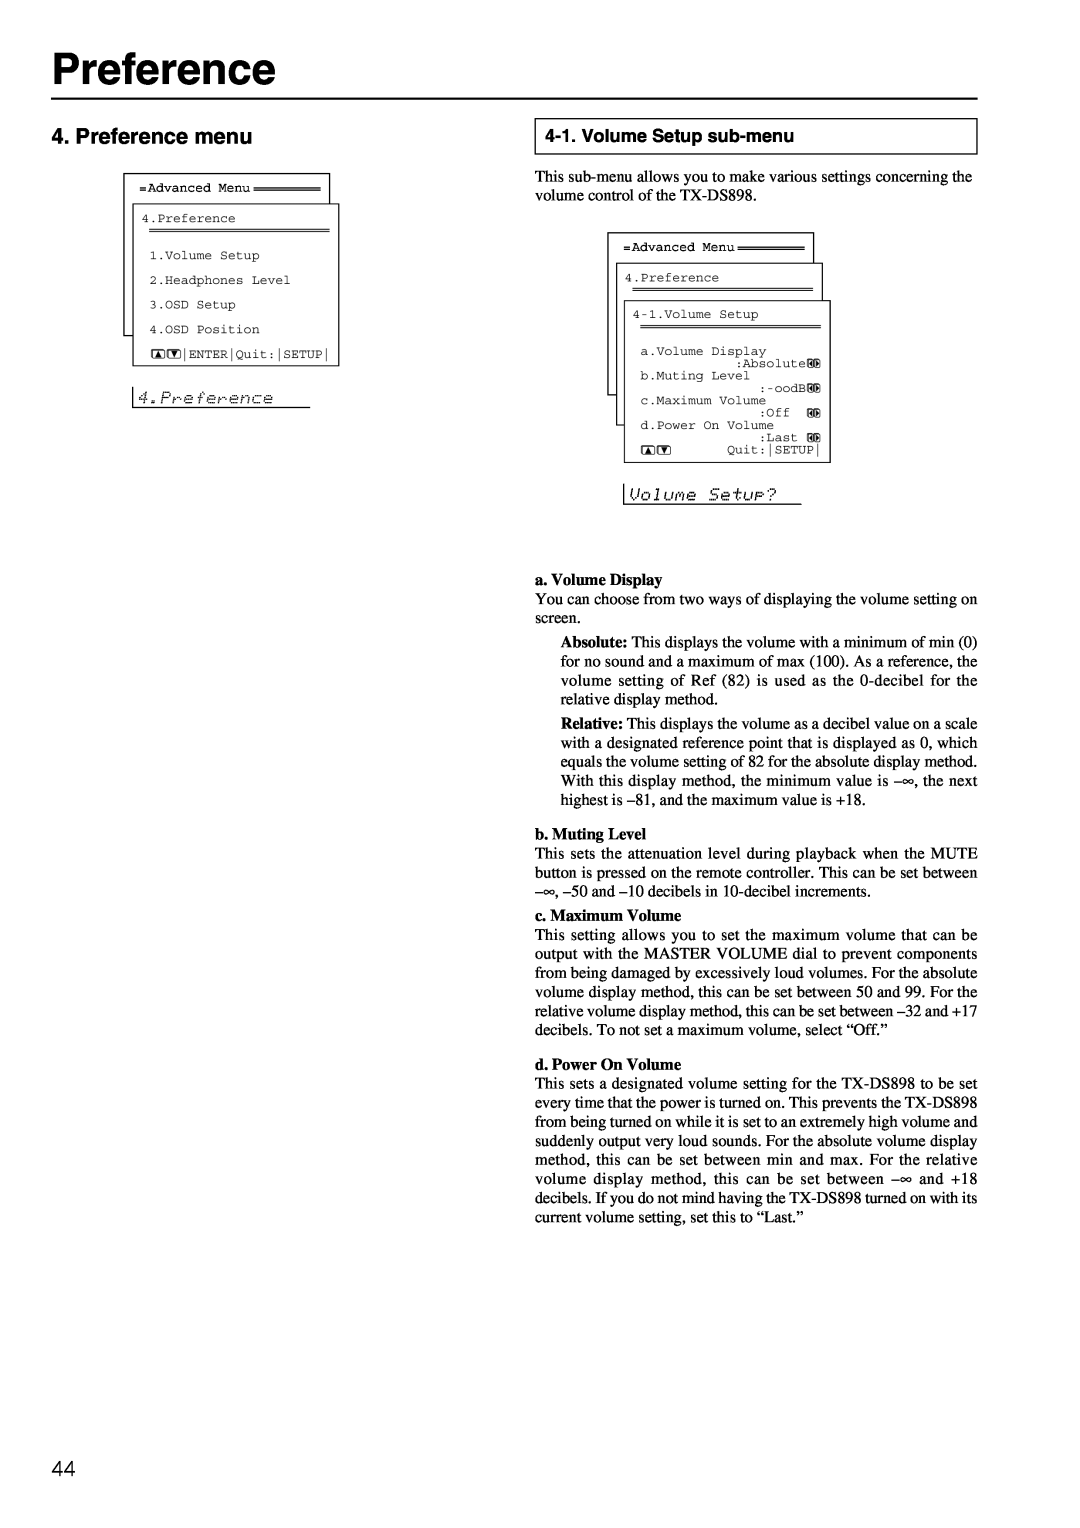 Onkyo TX-DS898 instruction manual Preference menu, Volume Setup sub-menu 